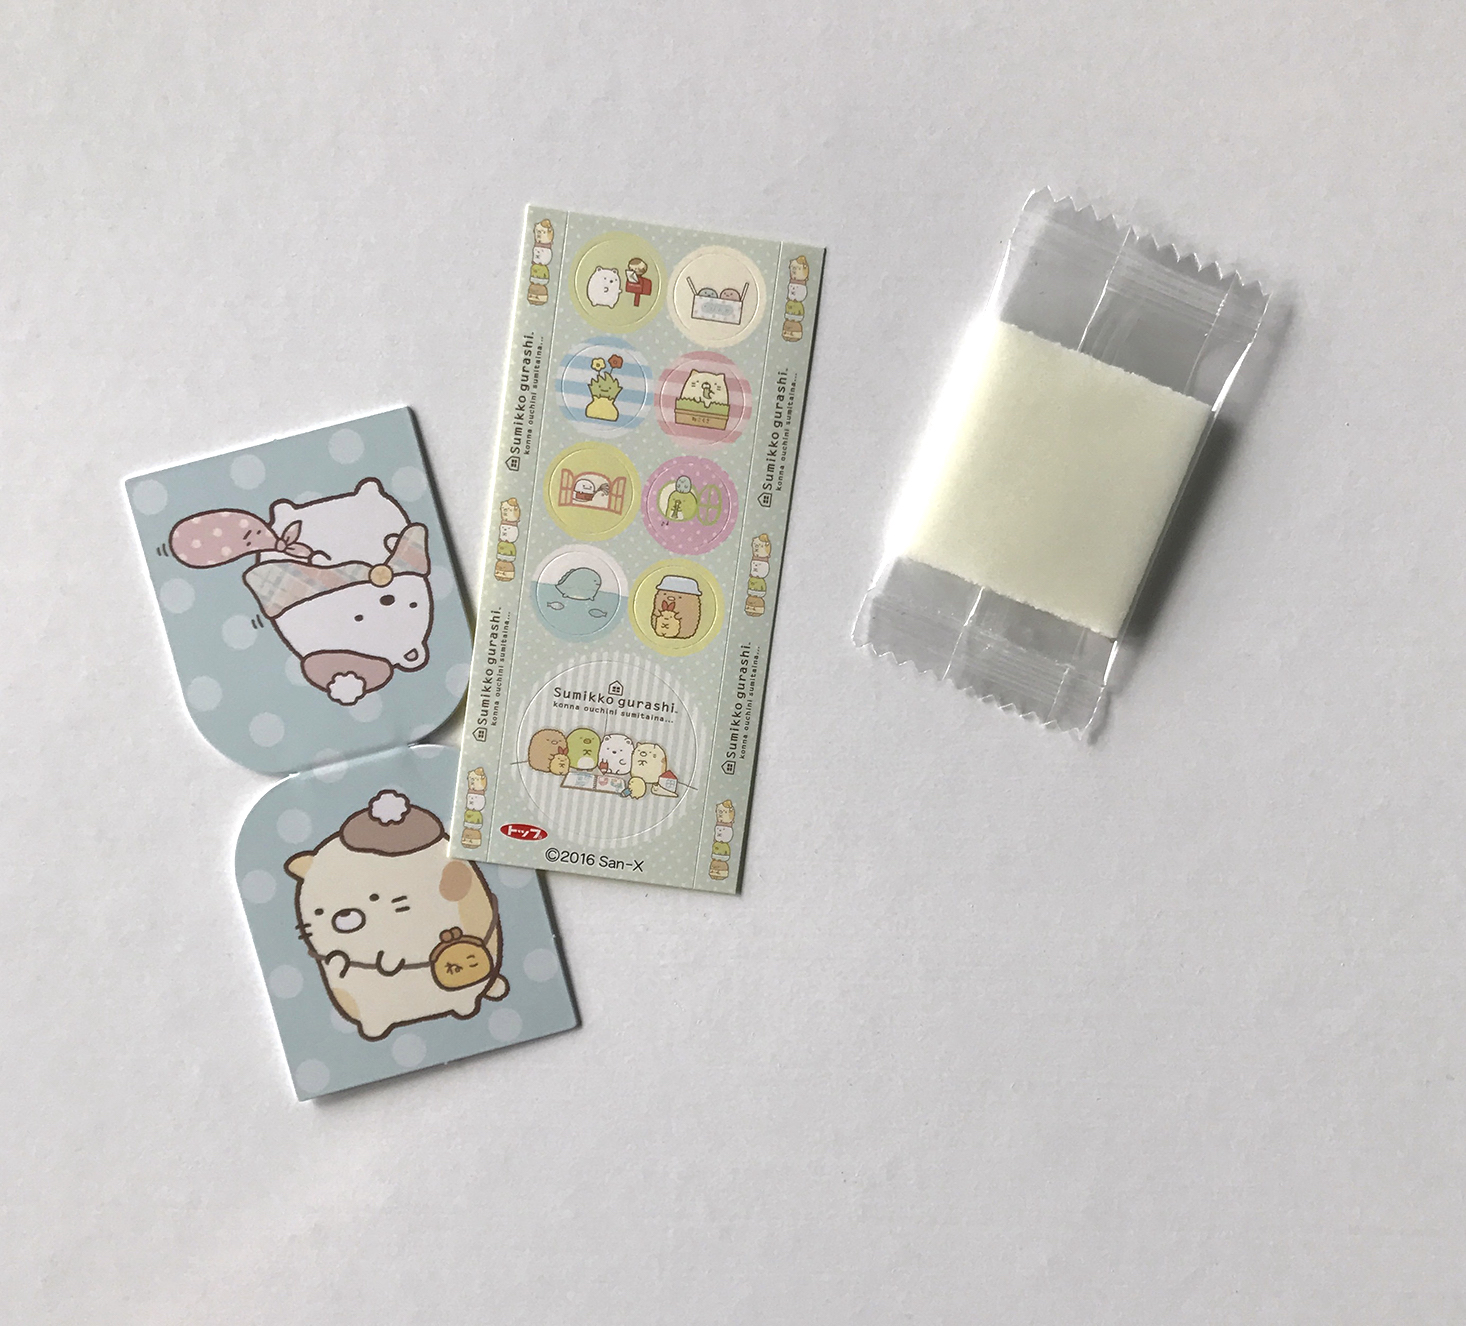 The-CuteBox-March-2017-Sumikko-Gursahi-Stickers-Contents